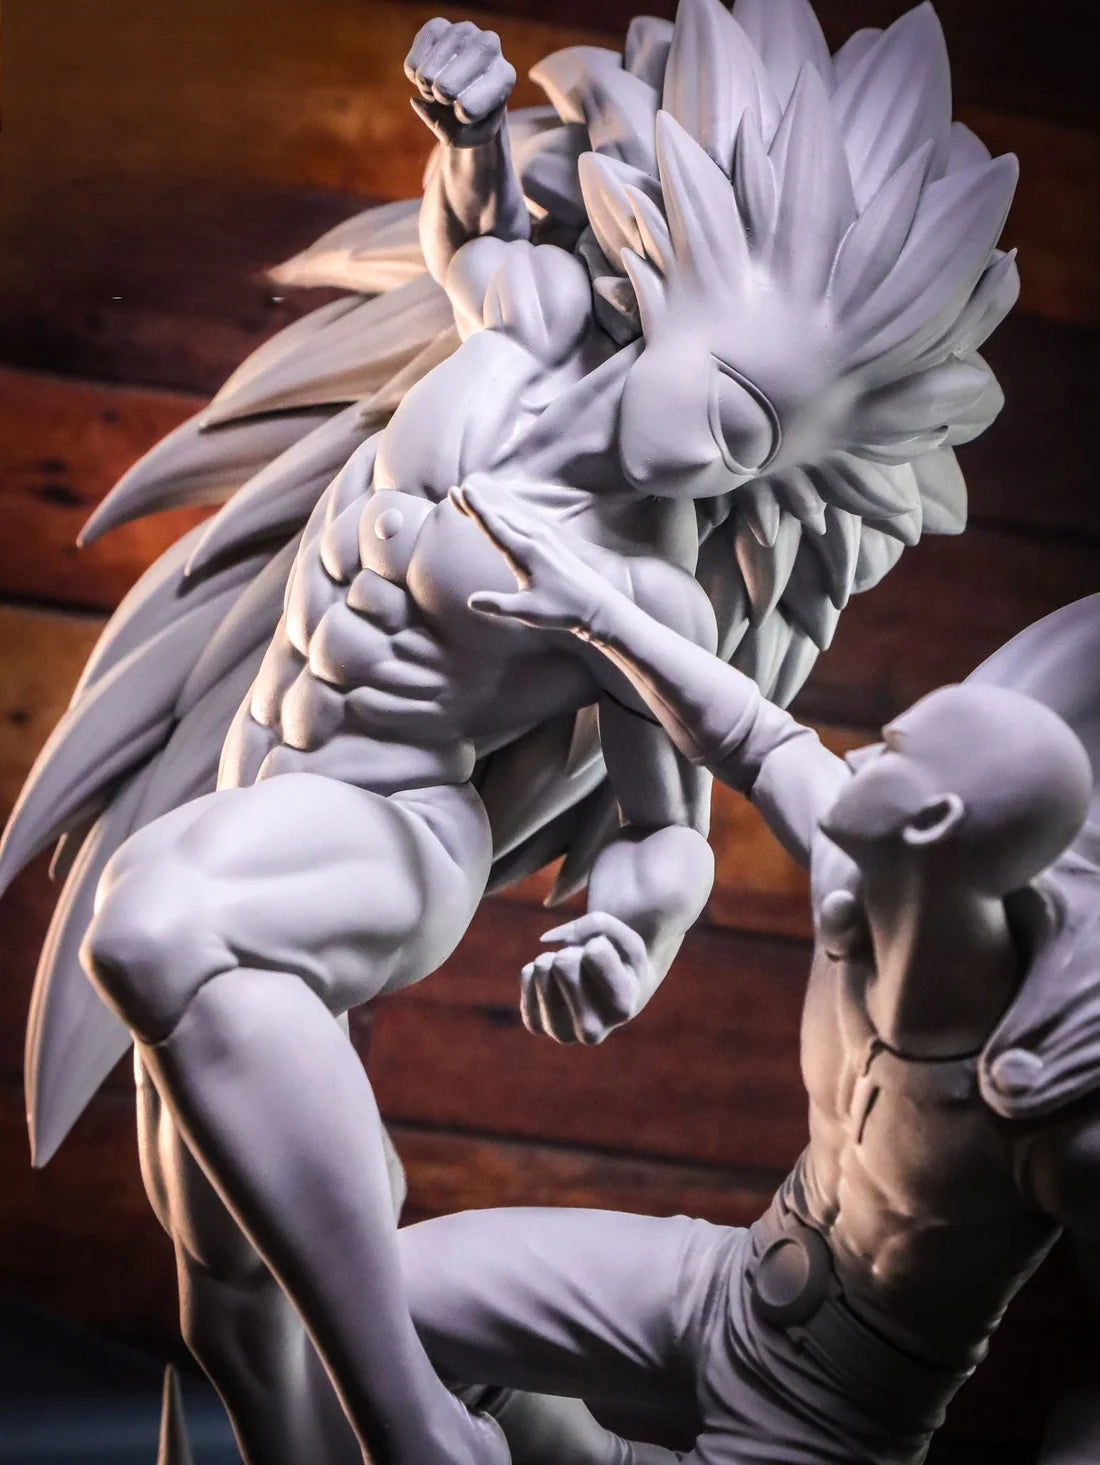 One Punch Man STL File 3D Printing Design Anime Character Saitama vs Boros STL File 0178